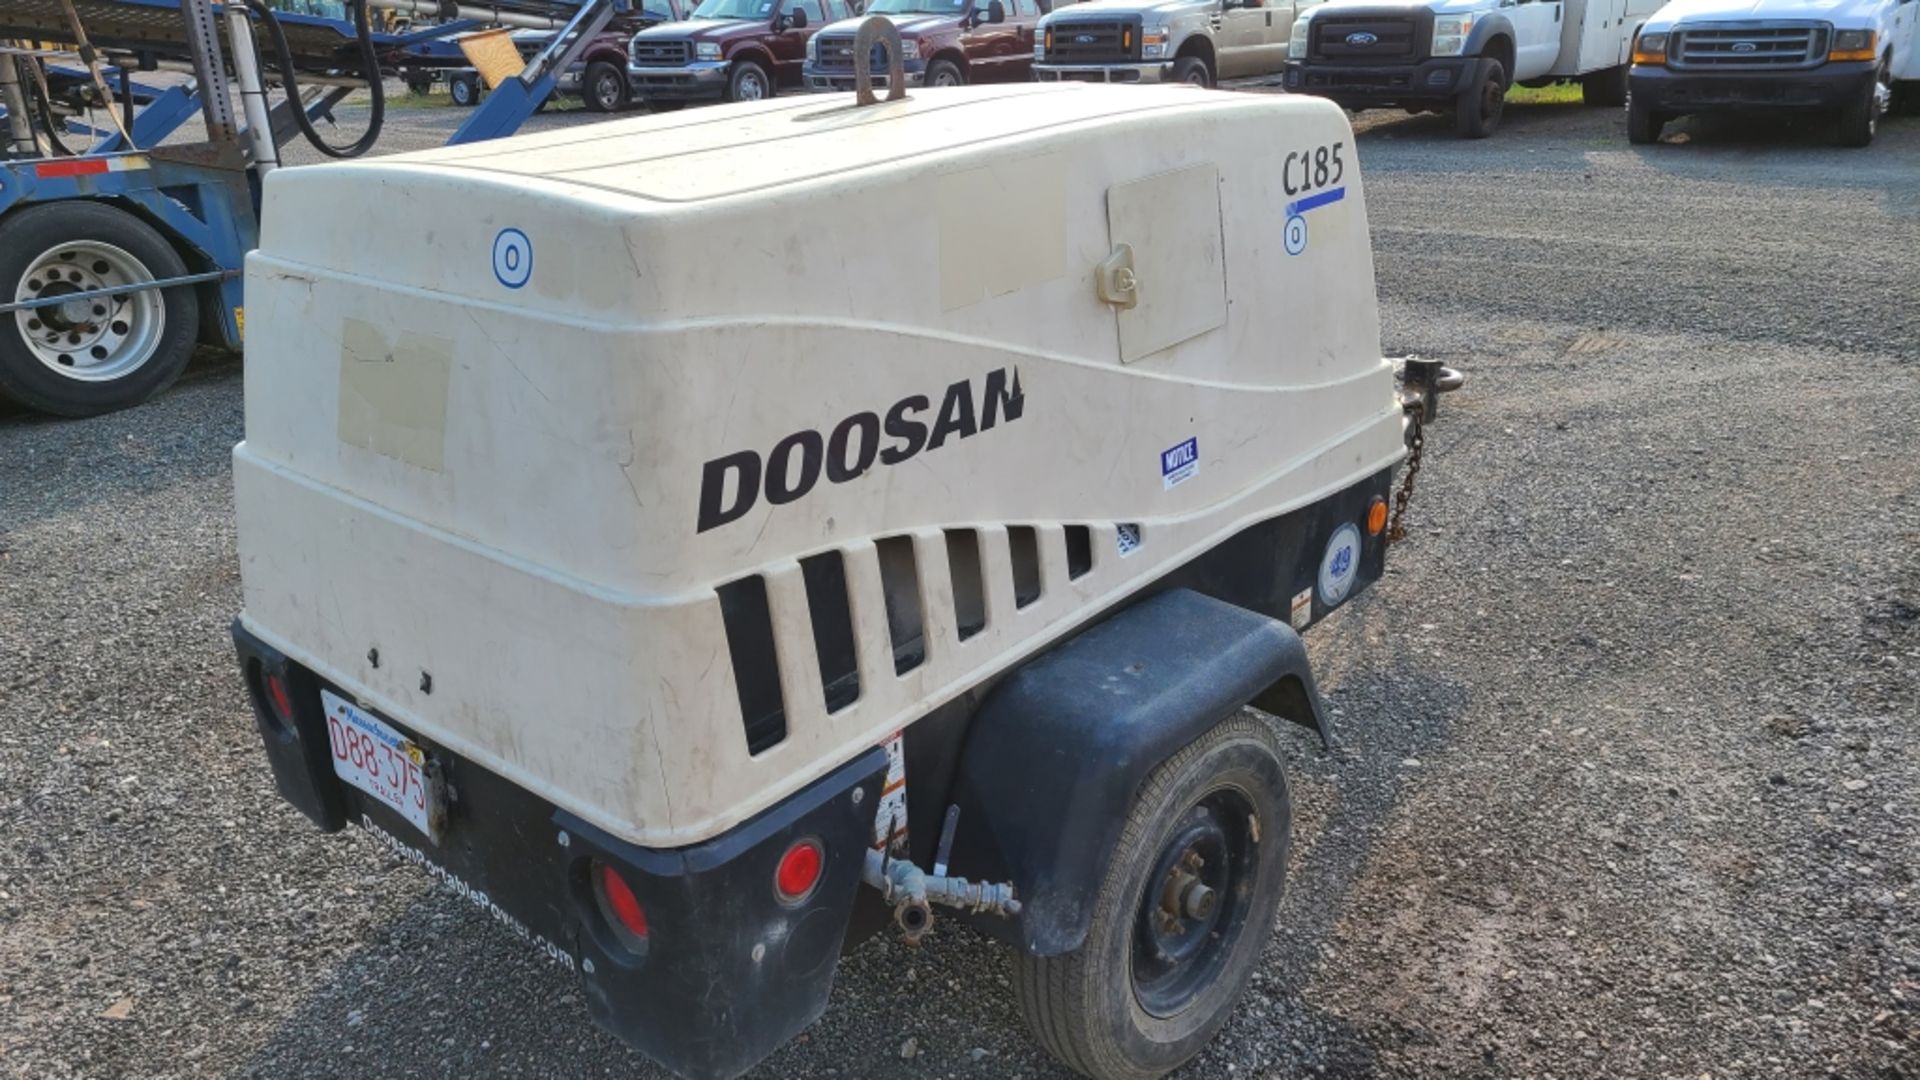 2012 Doosan Cp185 Compressor - Image 4 of 7